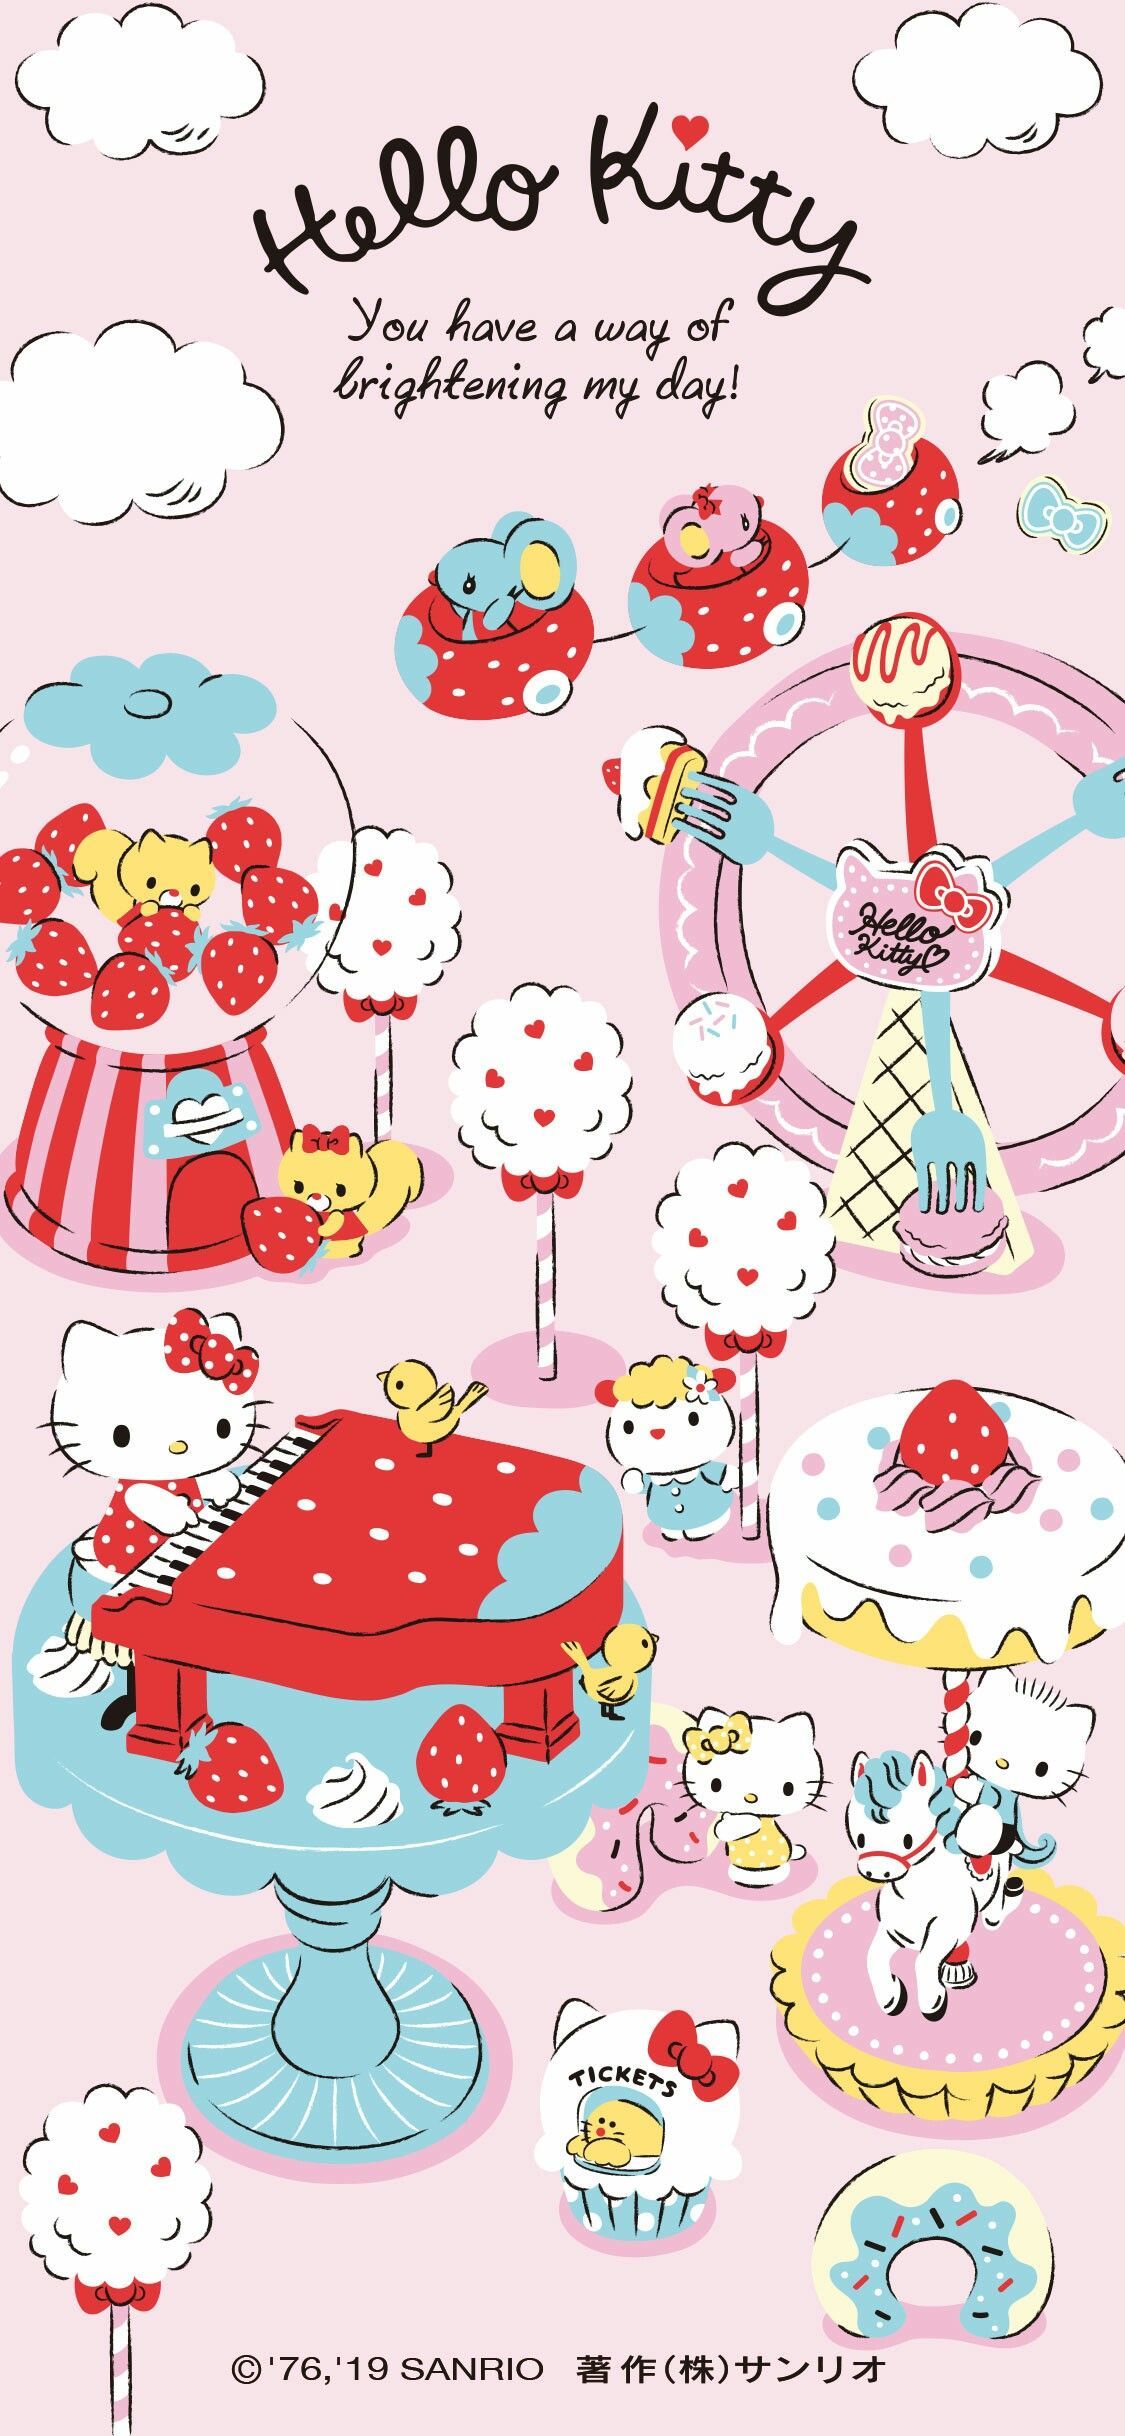 Hello Kitty Ichigo(Strawberry) theme phone wallpaper for iPhone X. Source: sanrio.co.j. Hello kitty wallpaper, Hello kitty phone wallpaper, Wallpaper iphone cute